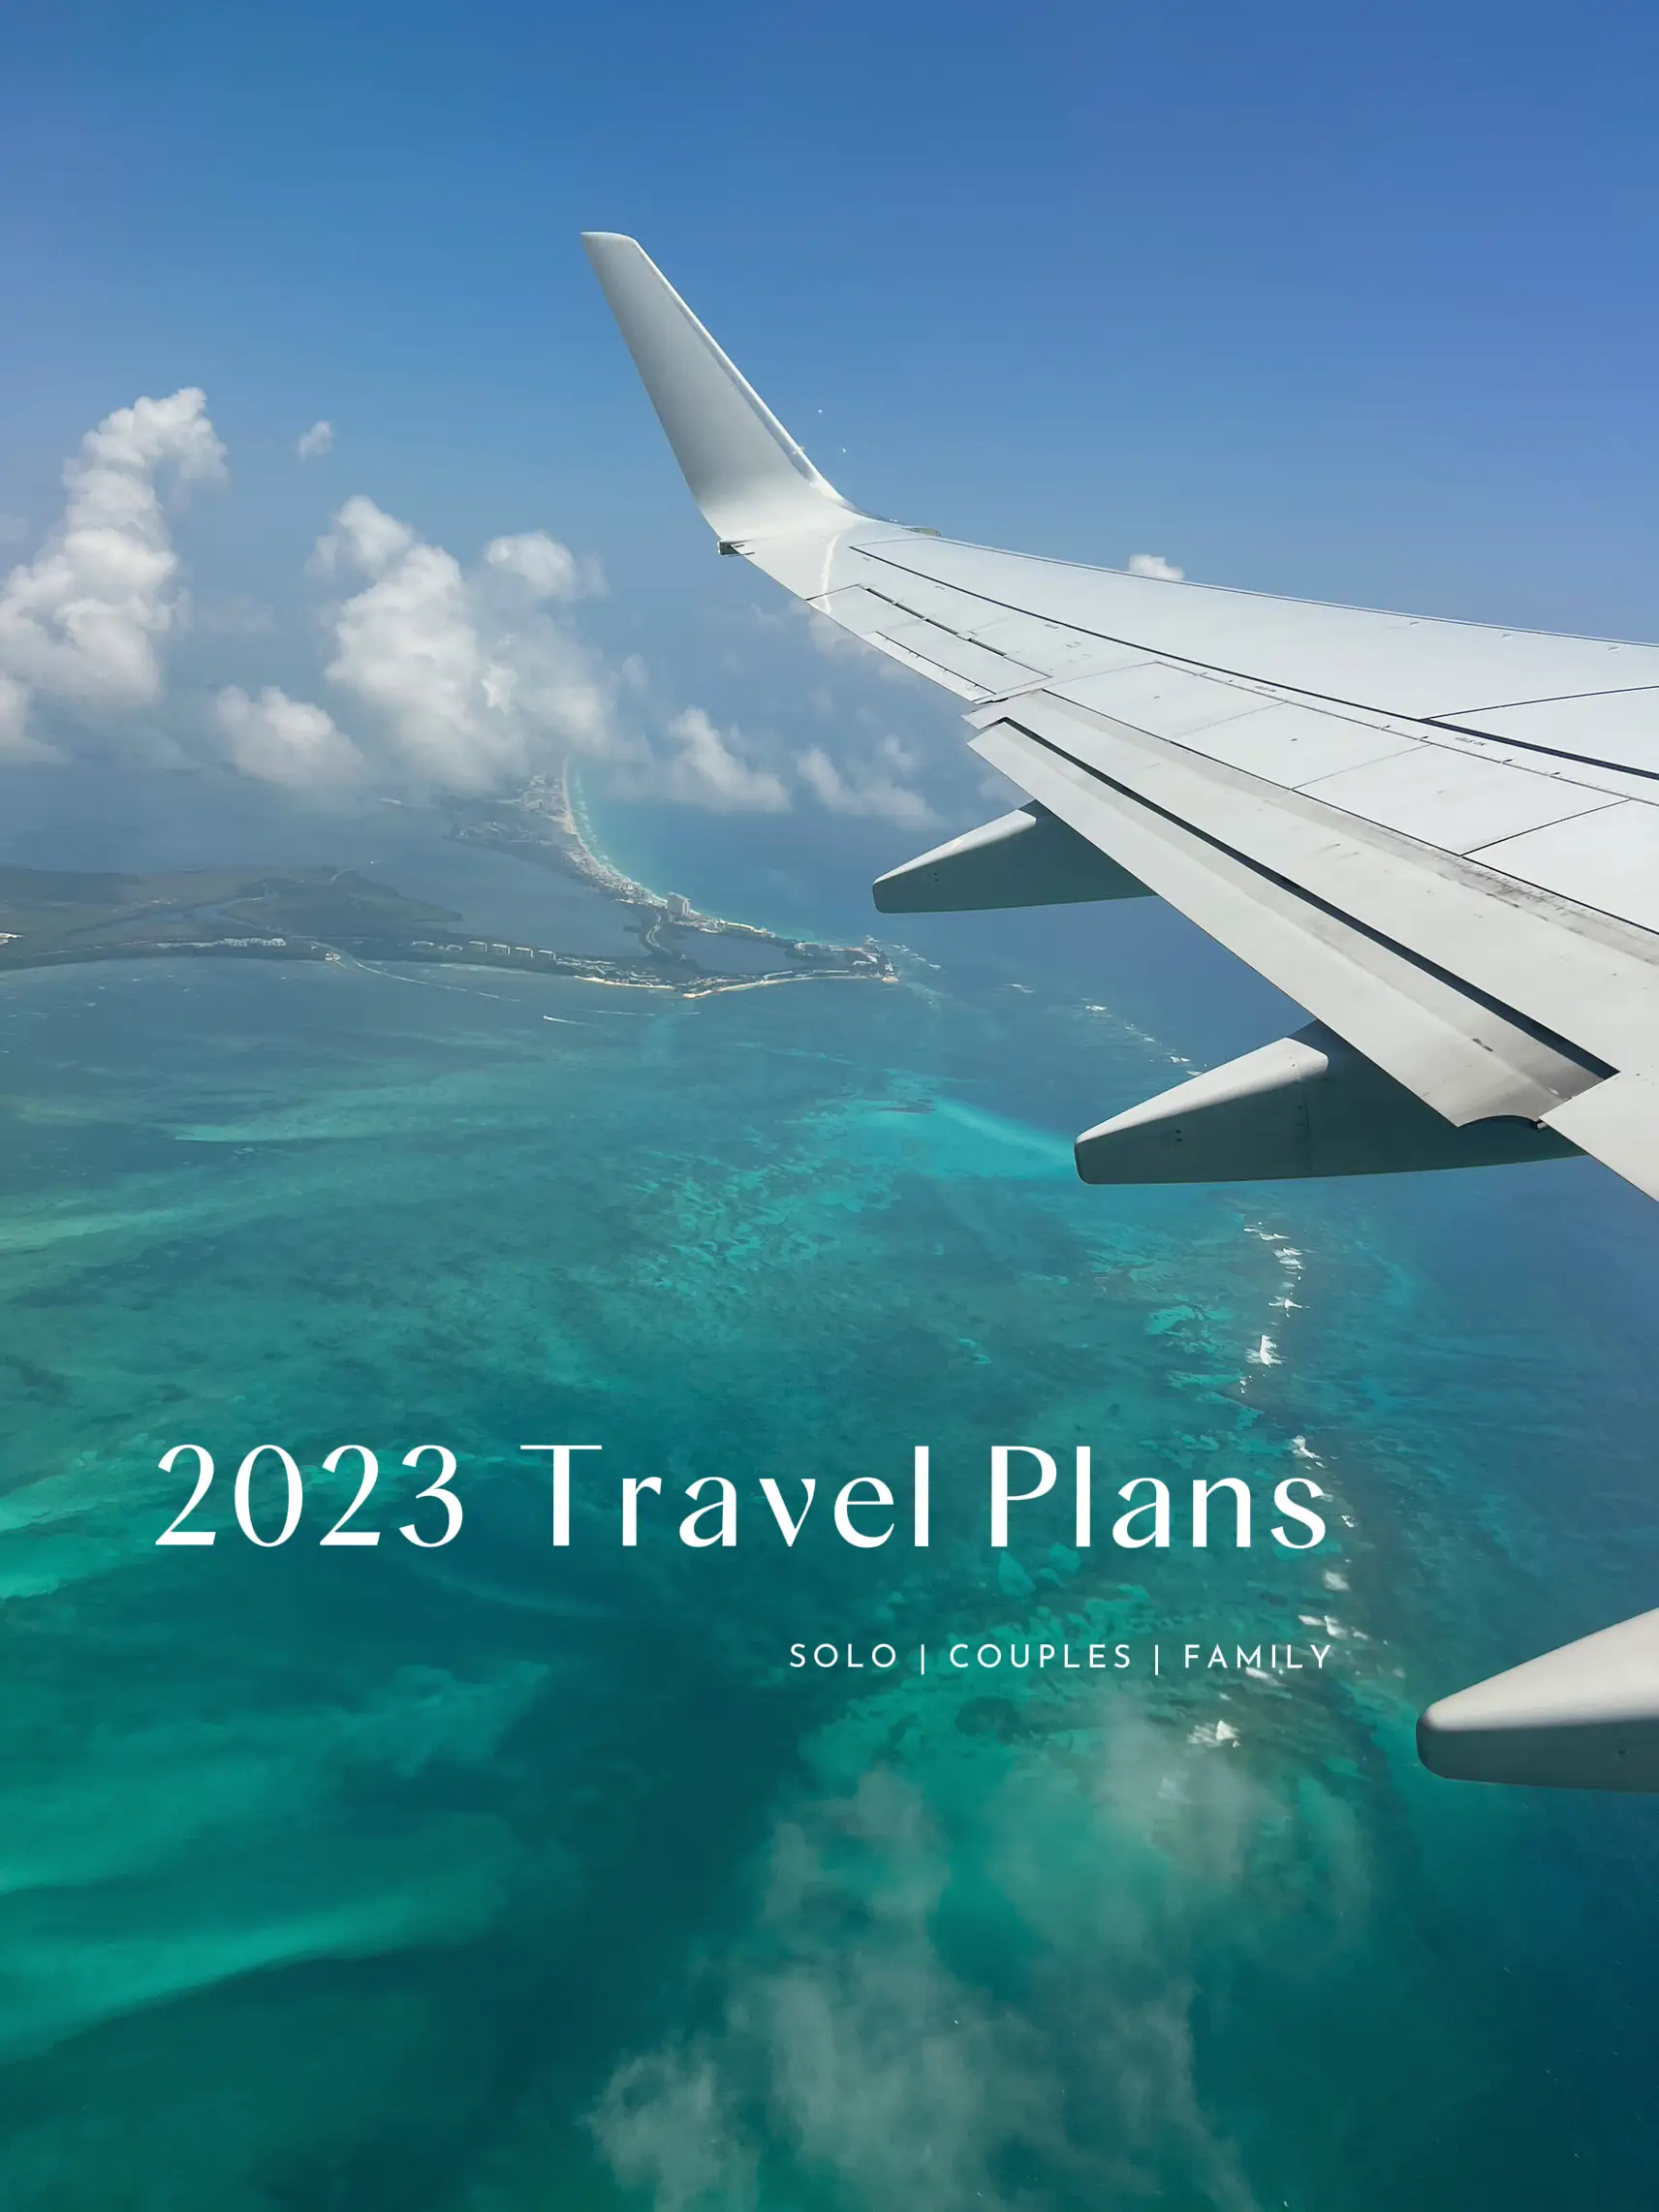 2023 Travel Plans 🌎✈️'s images